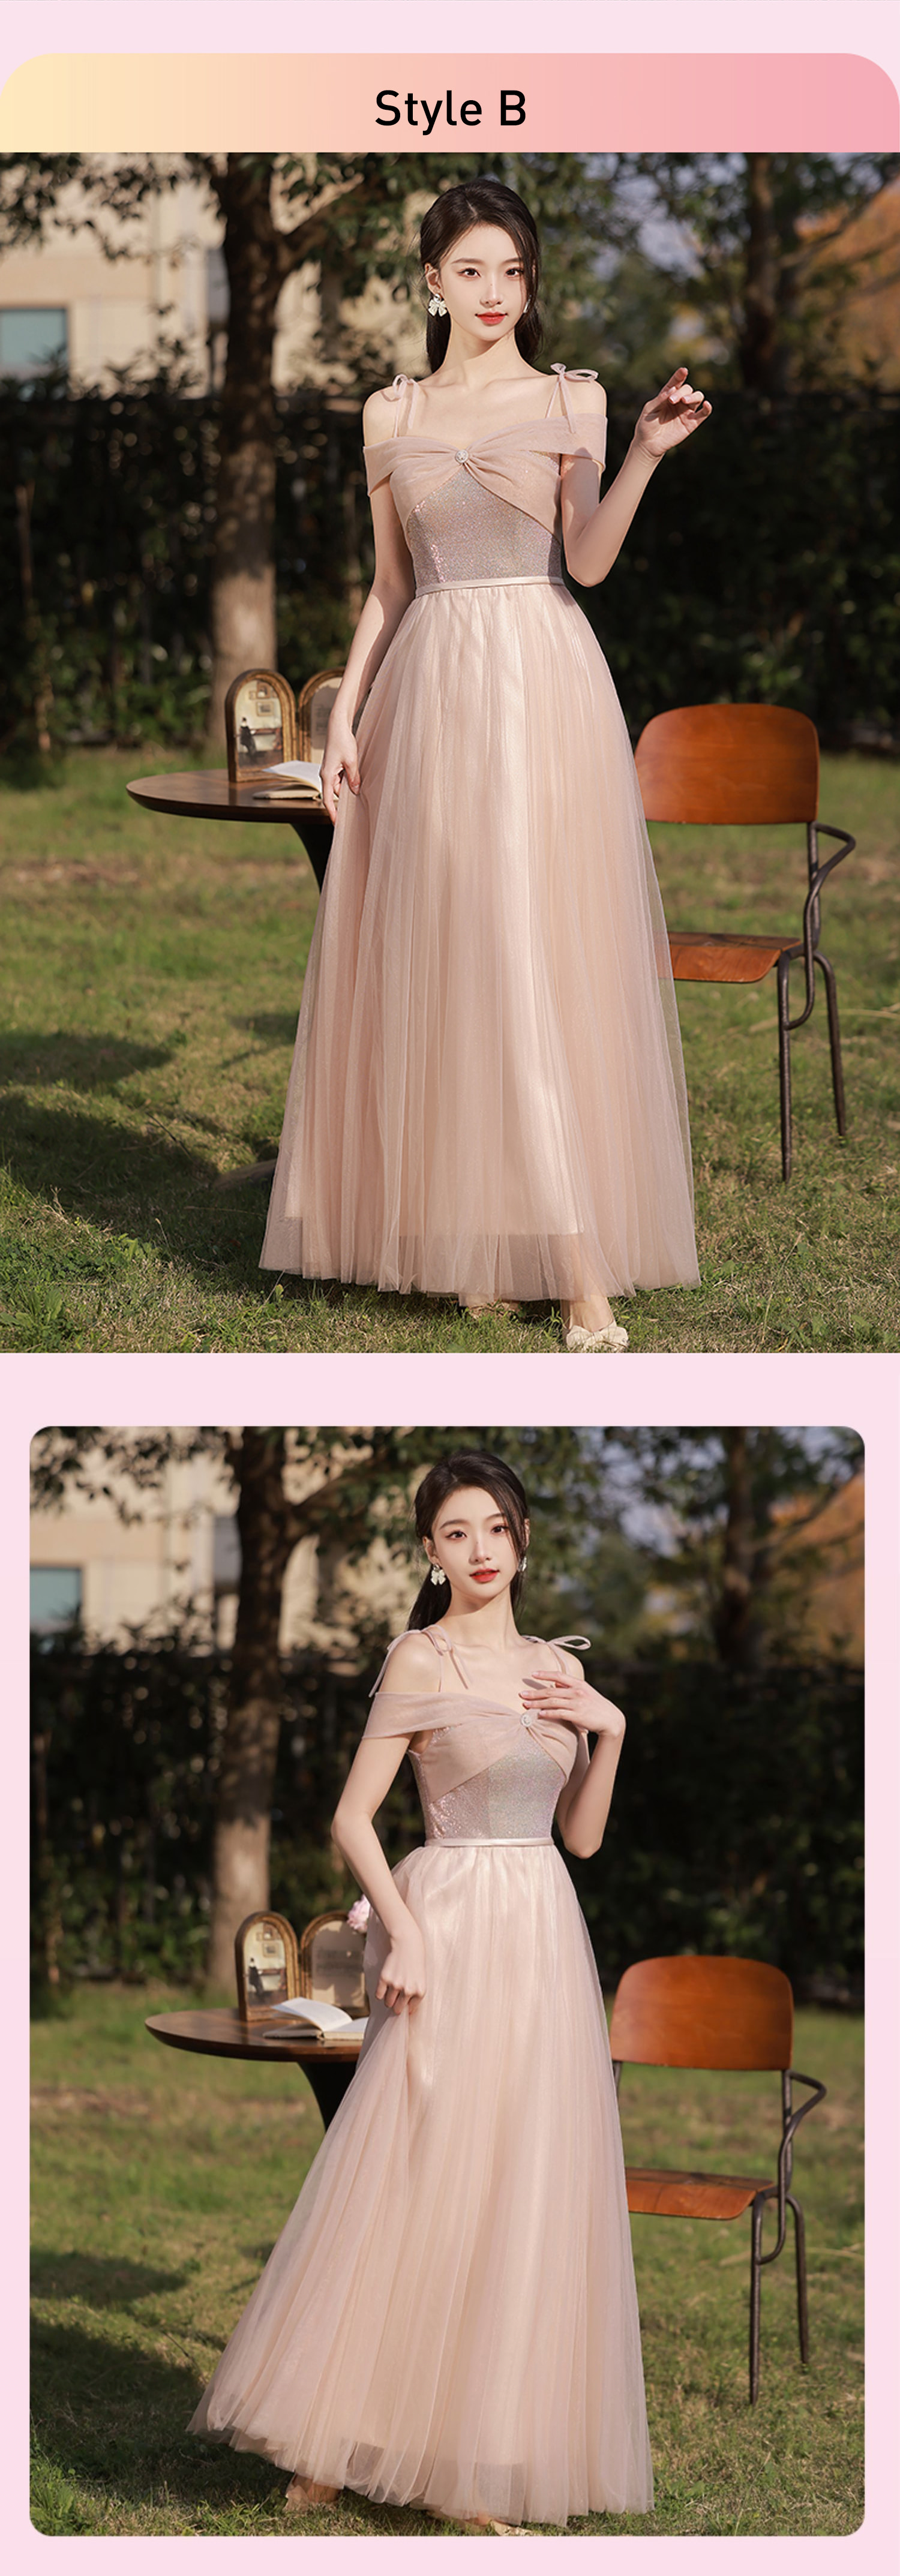 Elegant-Pink-Maxi-Dress-for-Prom-Wedding-Bridesmaid-Birthday-Party21.jpg